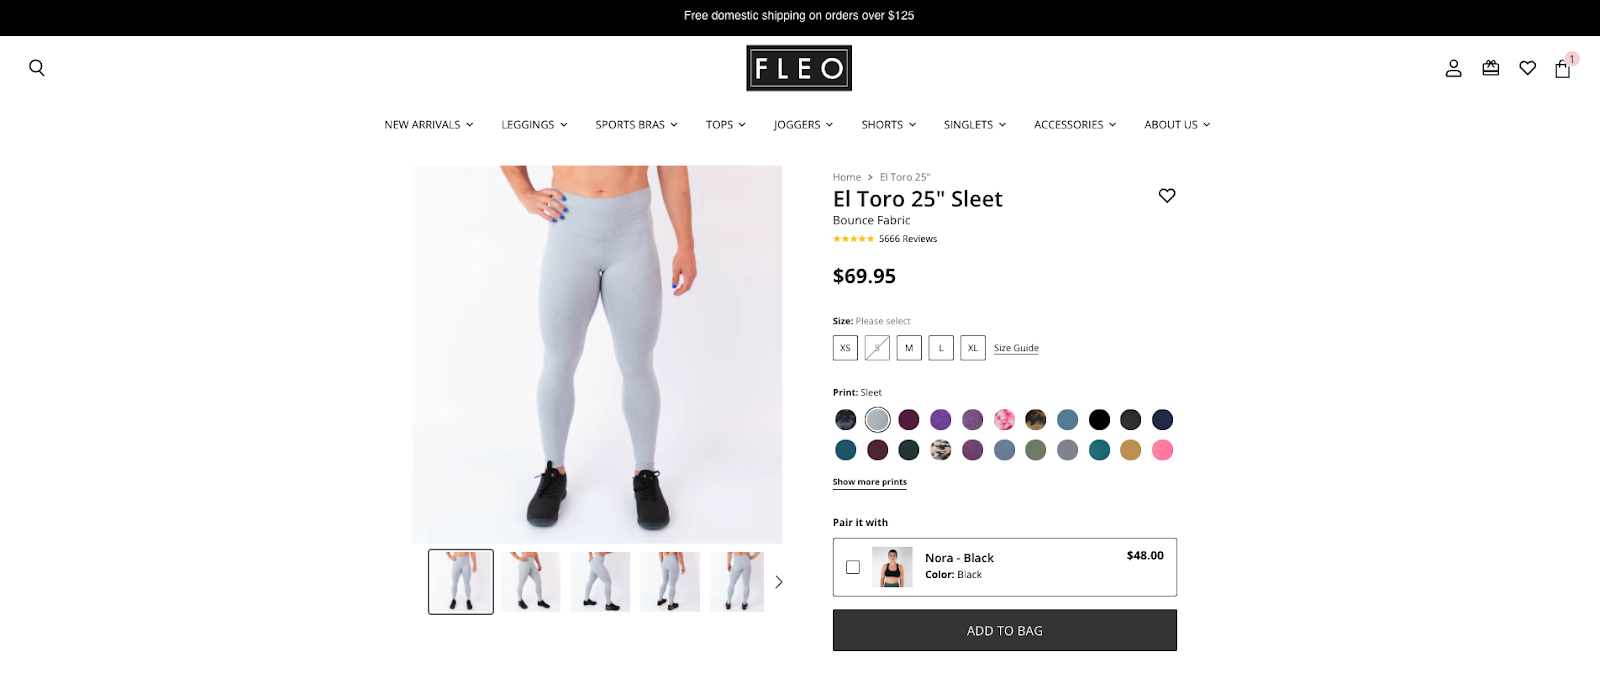 An El Toro 25" Sleet leggings product page from FLEO.com